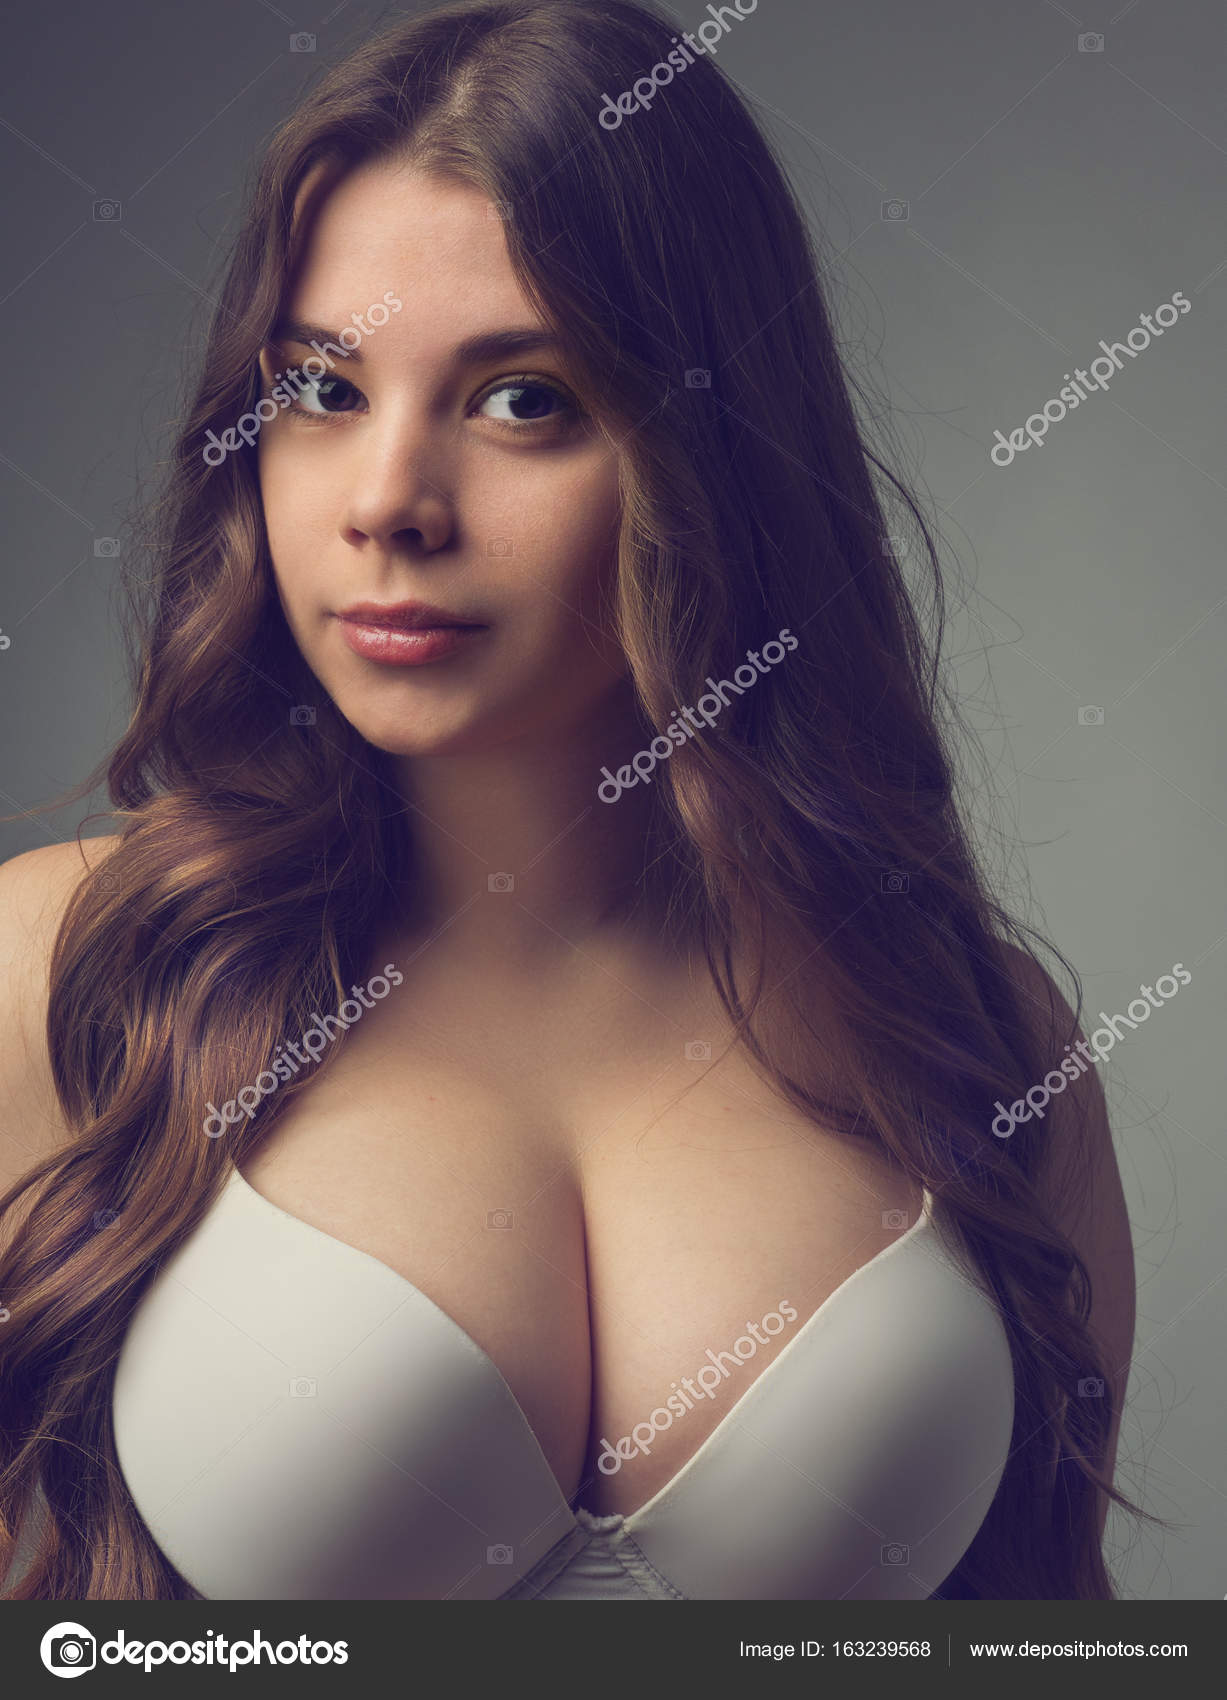 Big tits posing